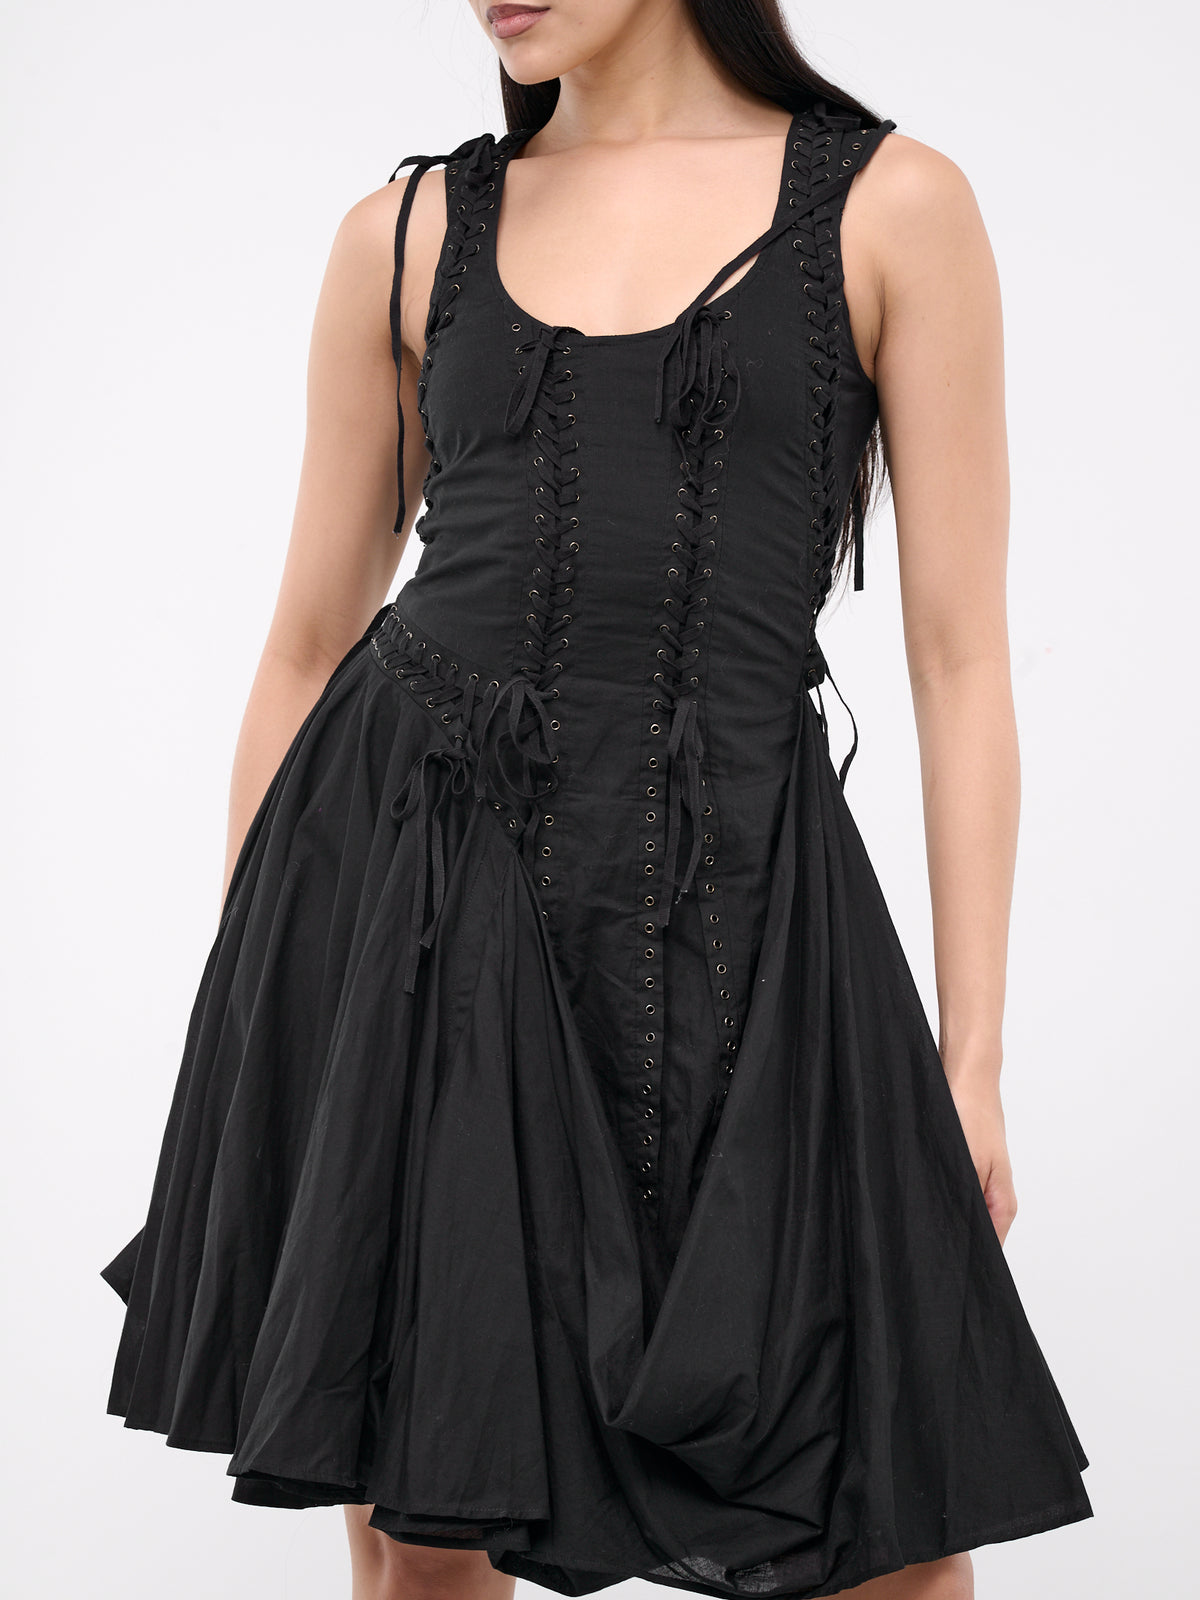 Lace-Up Dress (046-BLACK)